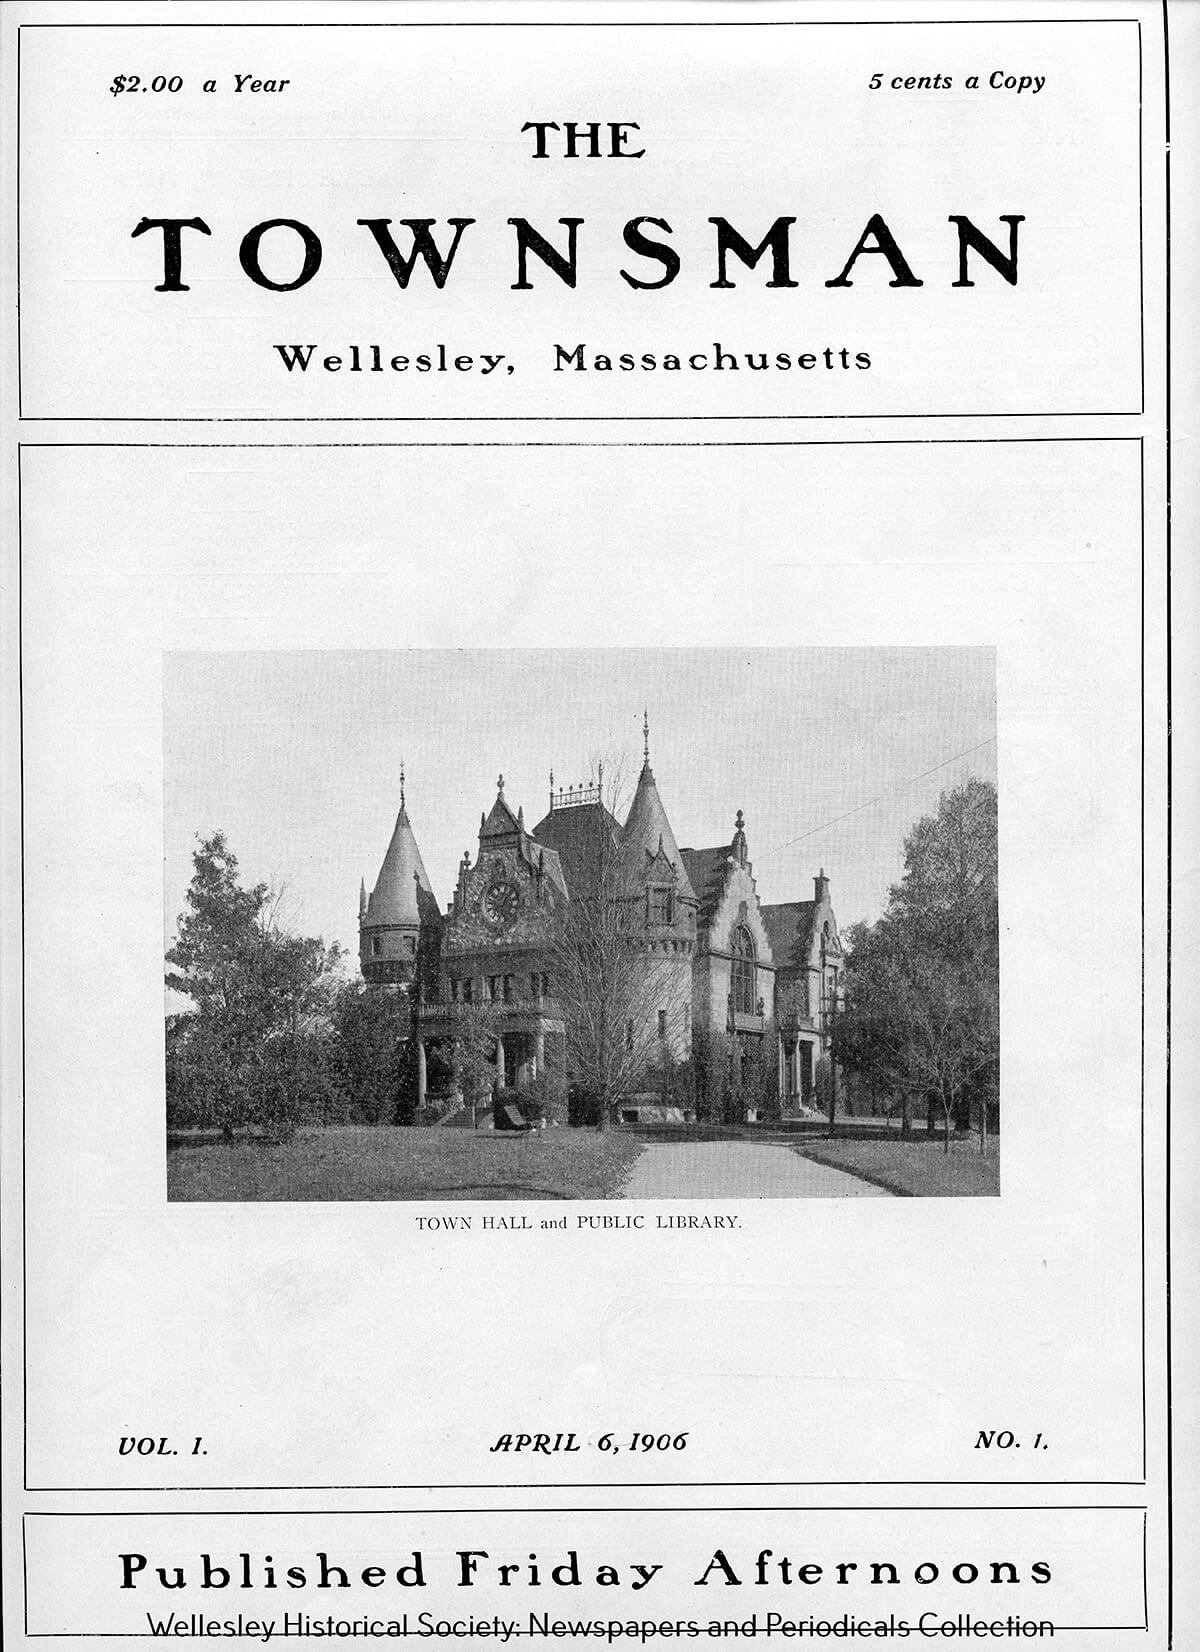 Wellesley Townsman 1906001 (1).jpg